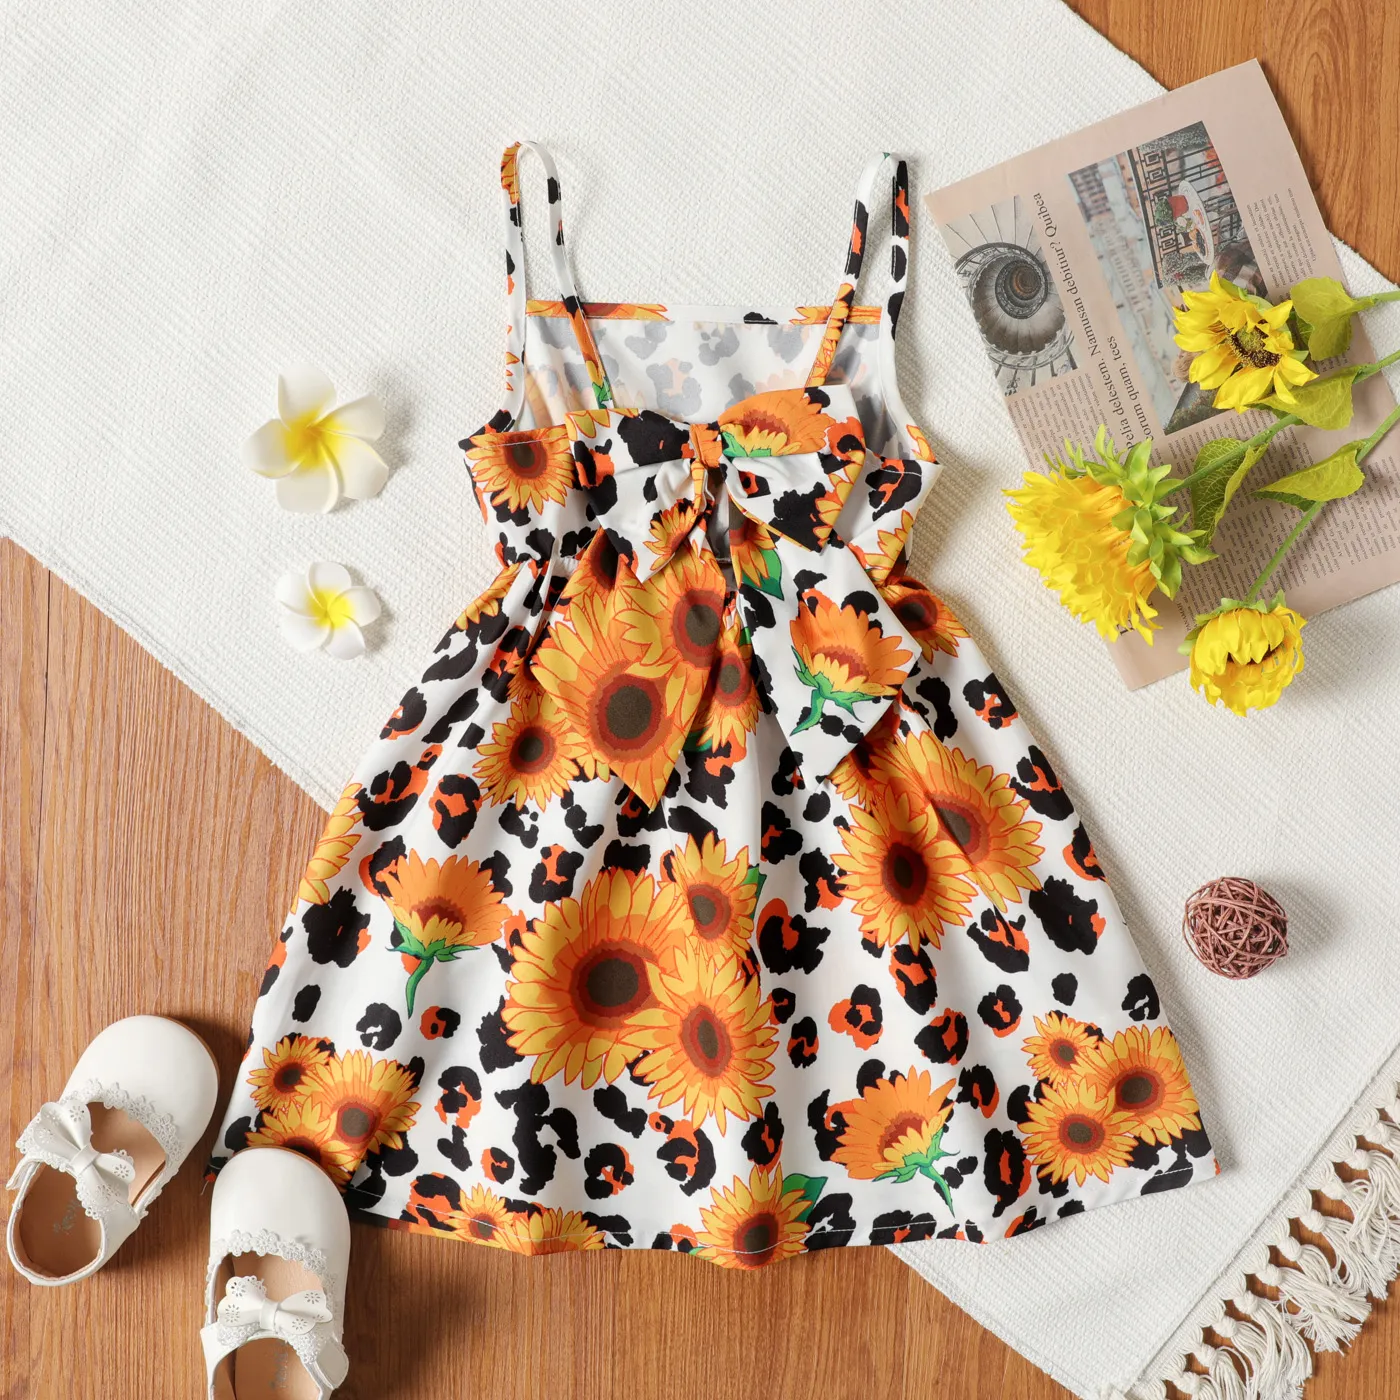 Toddler Girl Bowknot Design Floral Print Cami Dress/ Sandals